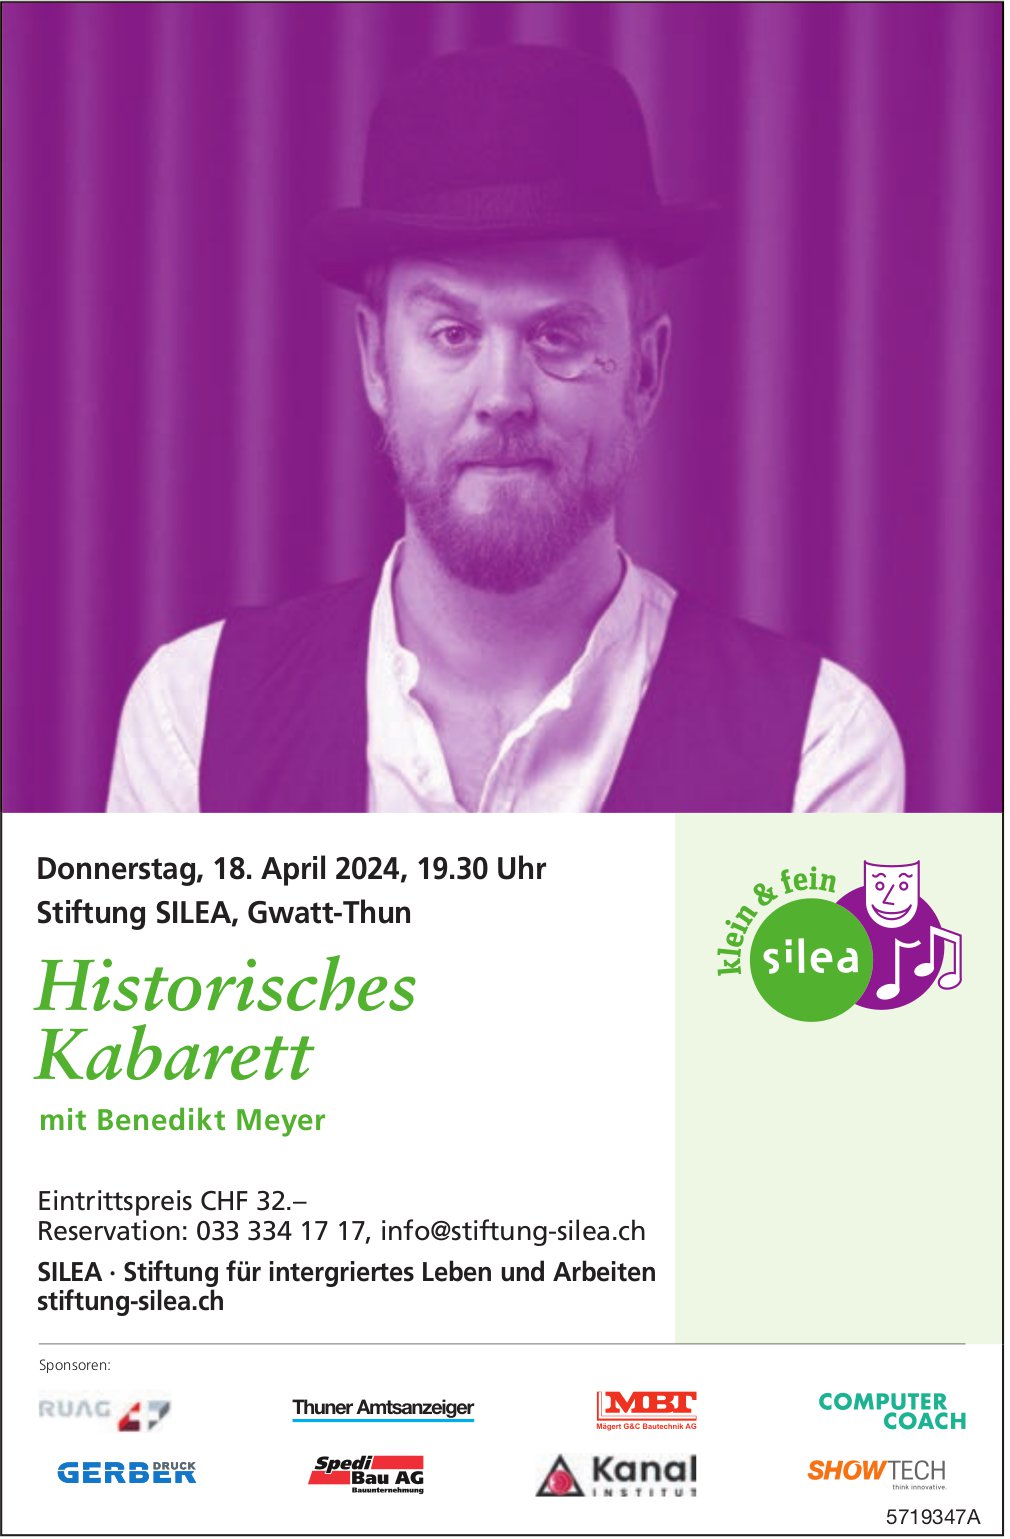 Historisches Kabarett mit Benedikt Meyer, 18. April, Stiftung SILEA, Gwatt-Thun